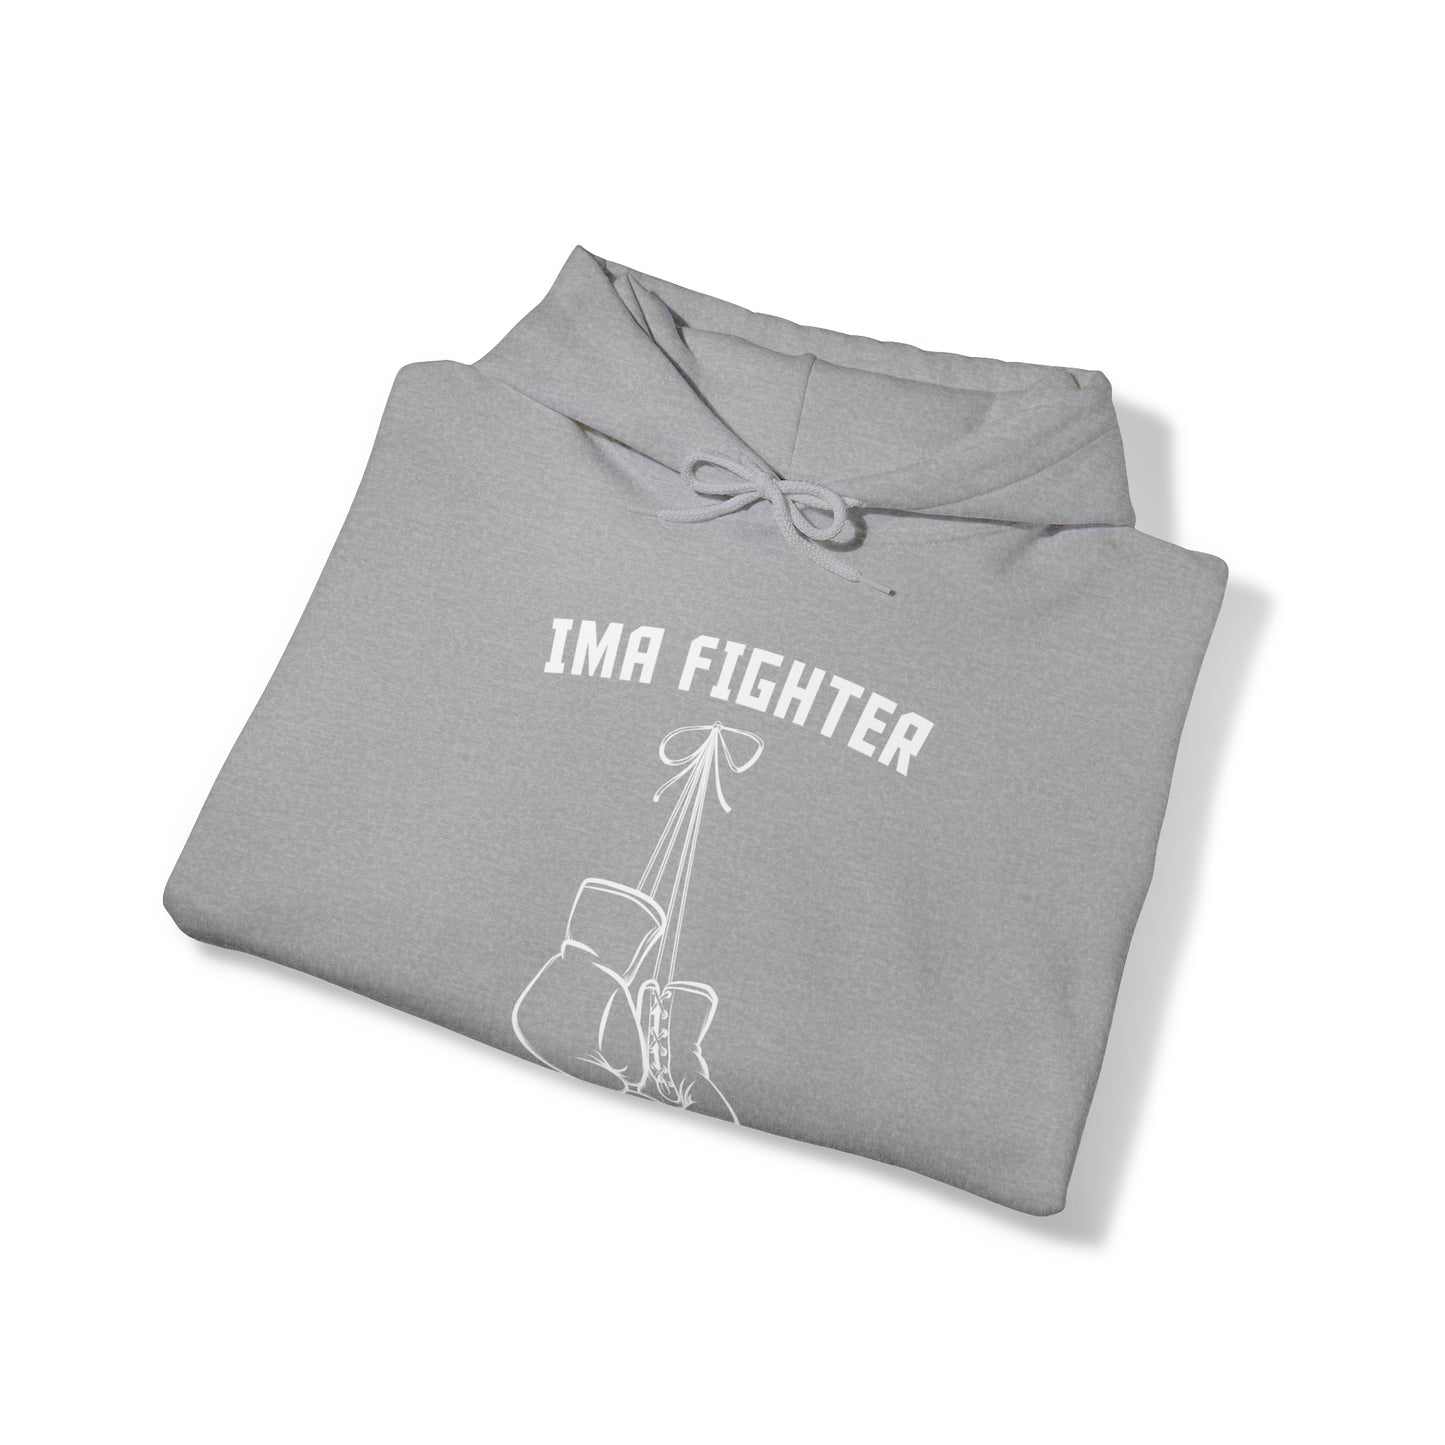 Fighter - Unisex Heavy Blend™ Hooded Sweatshirt